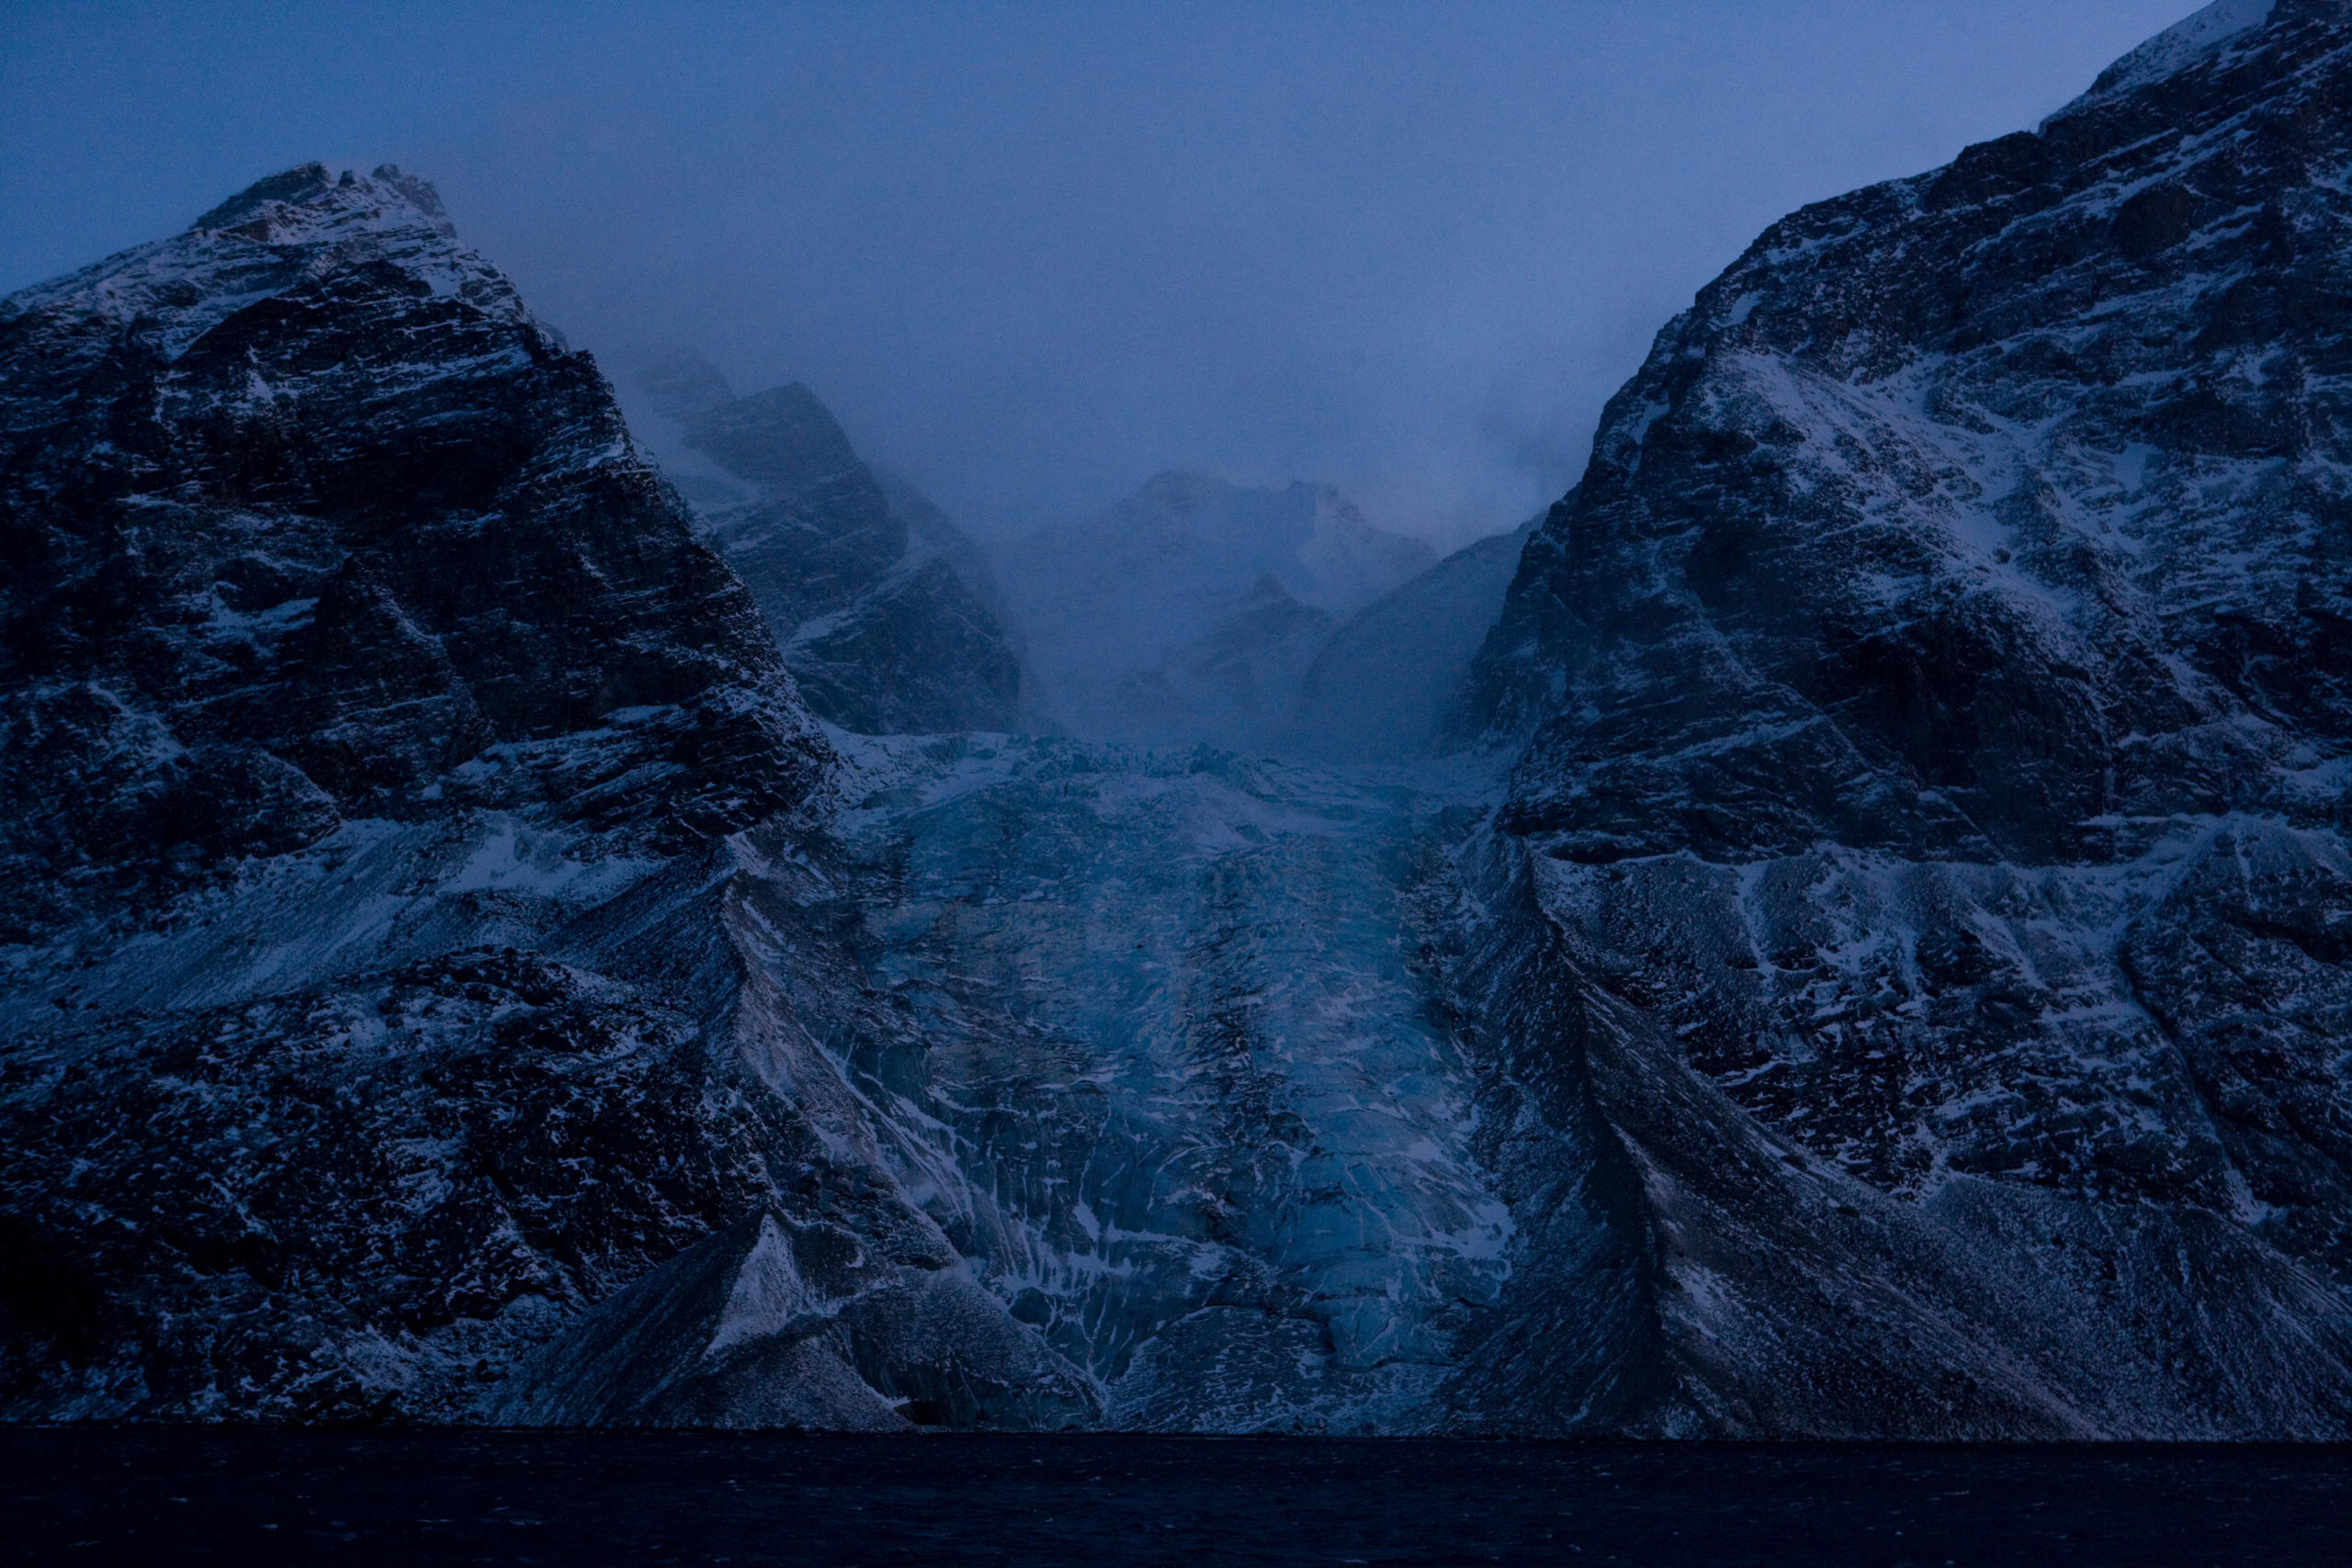 glacier front at night